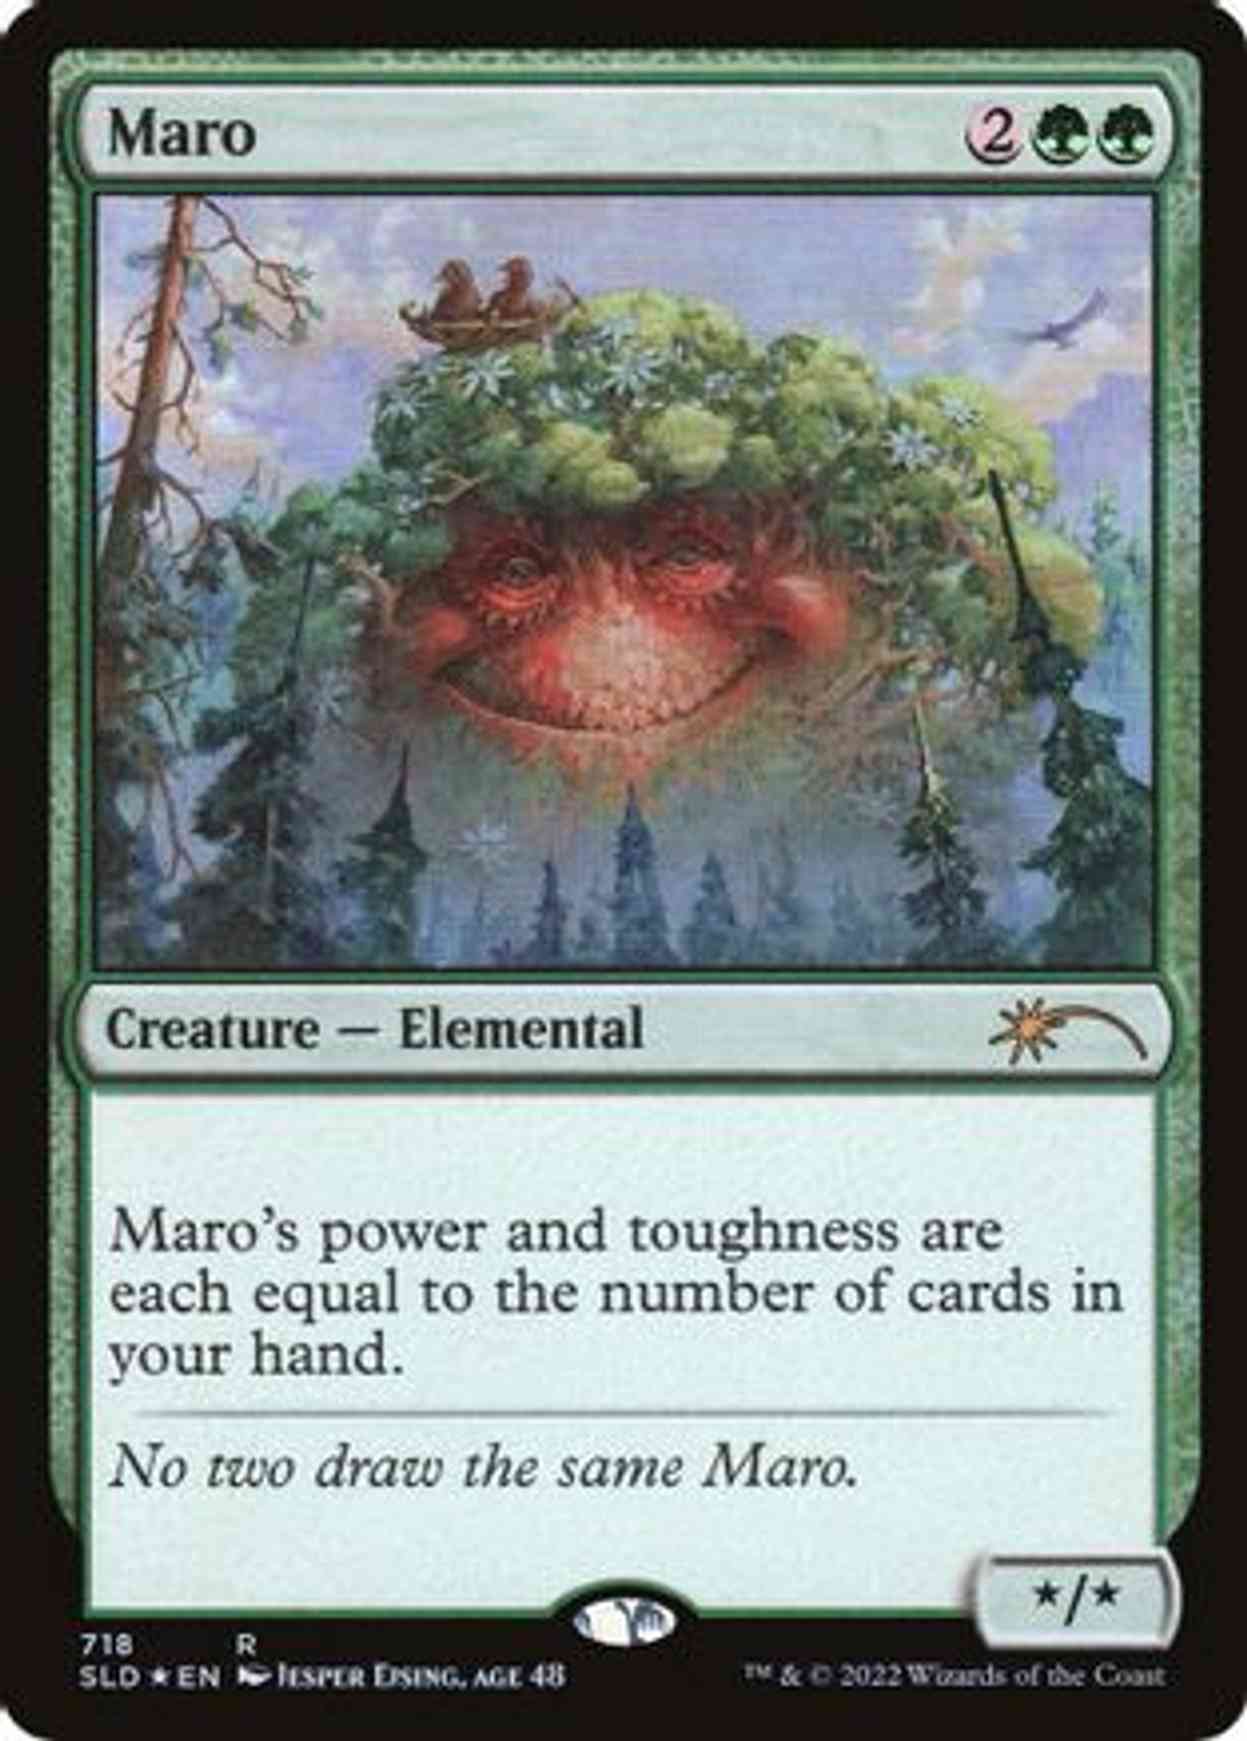 Maro (718) magic card front